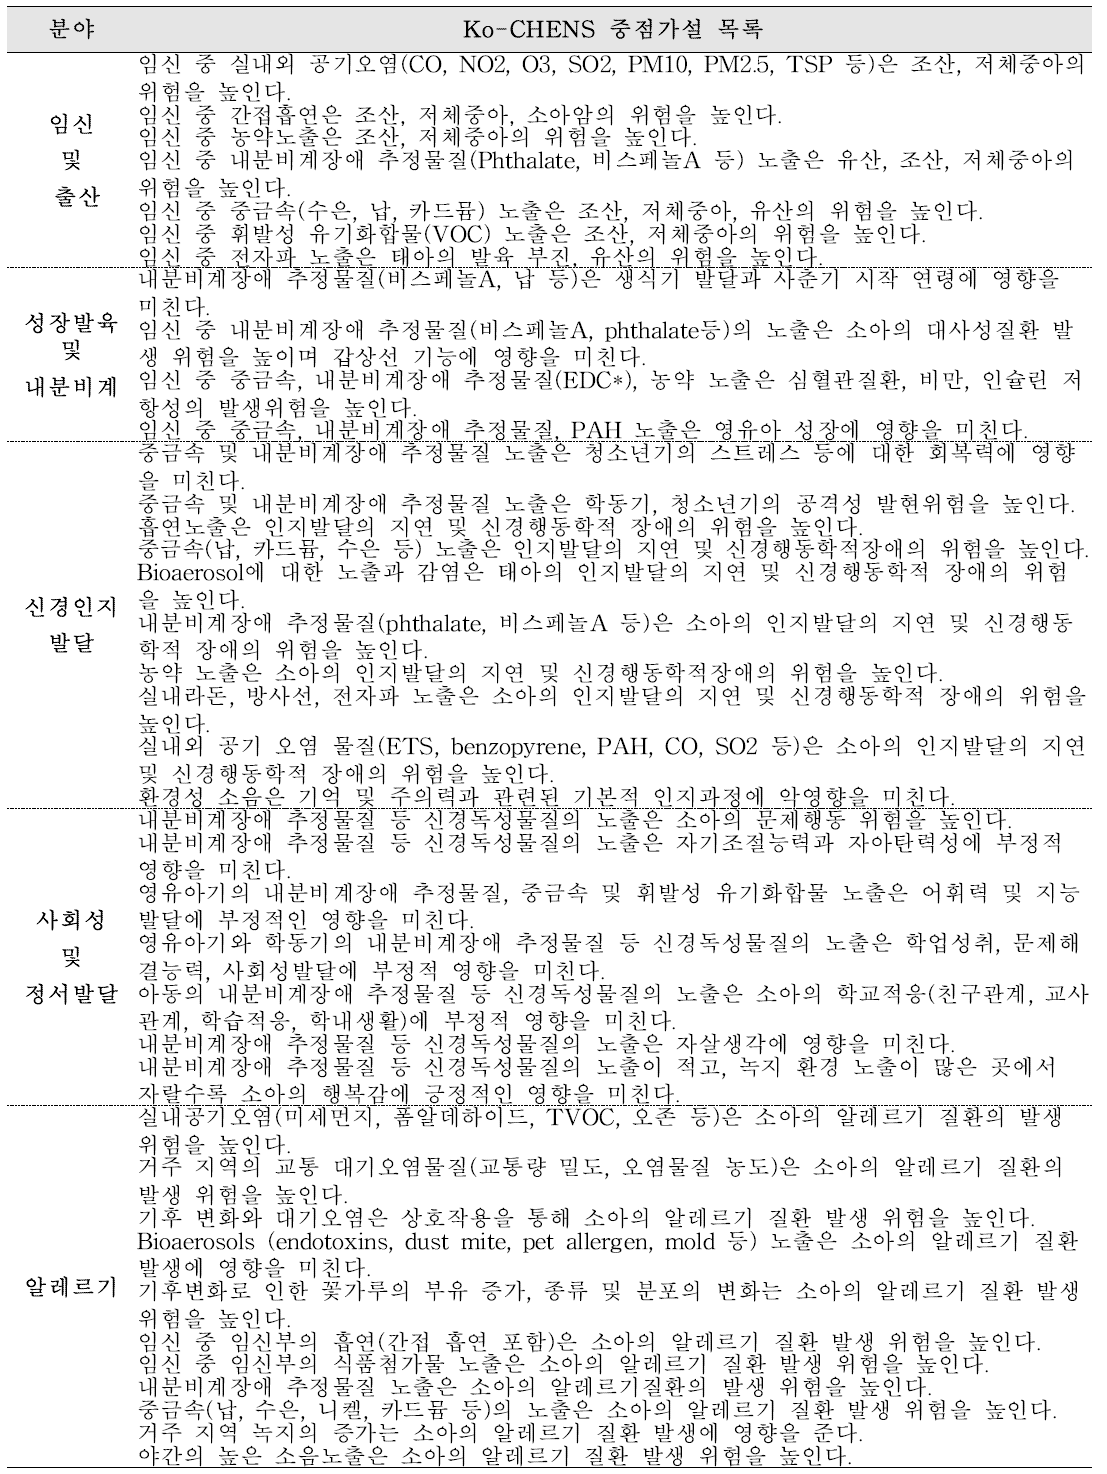 Ko-CHENS 중점가설 목록